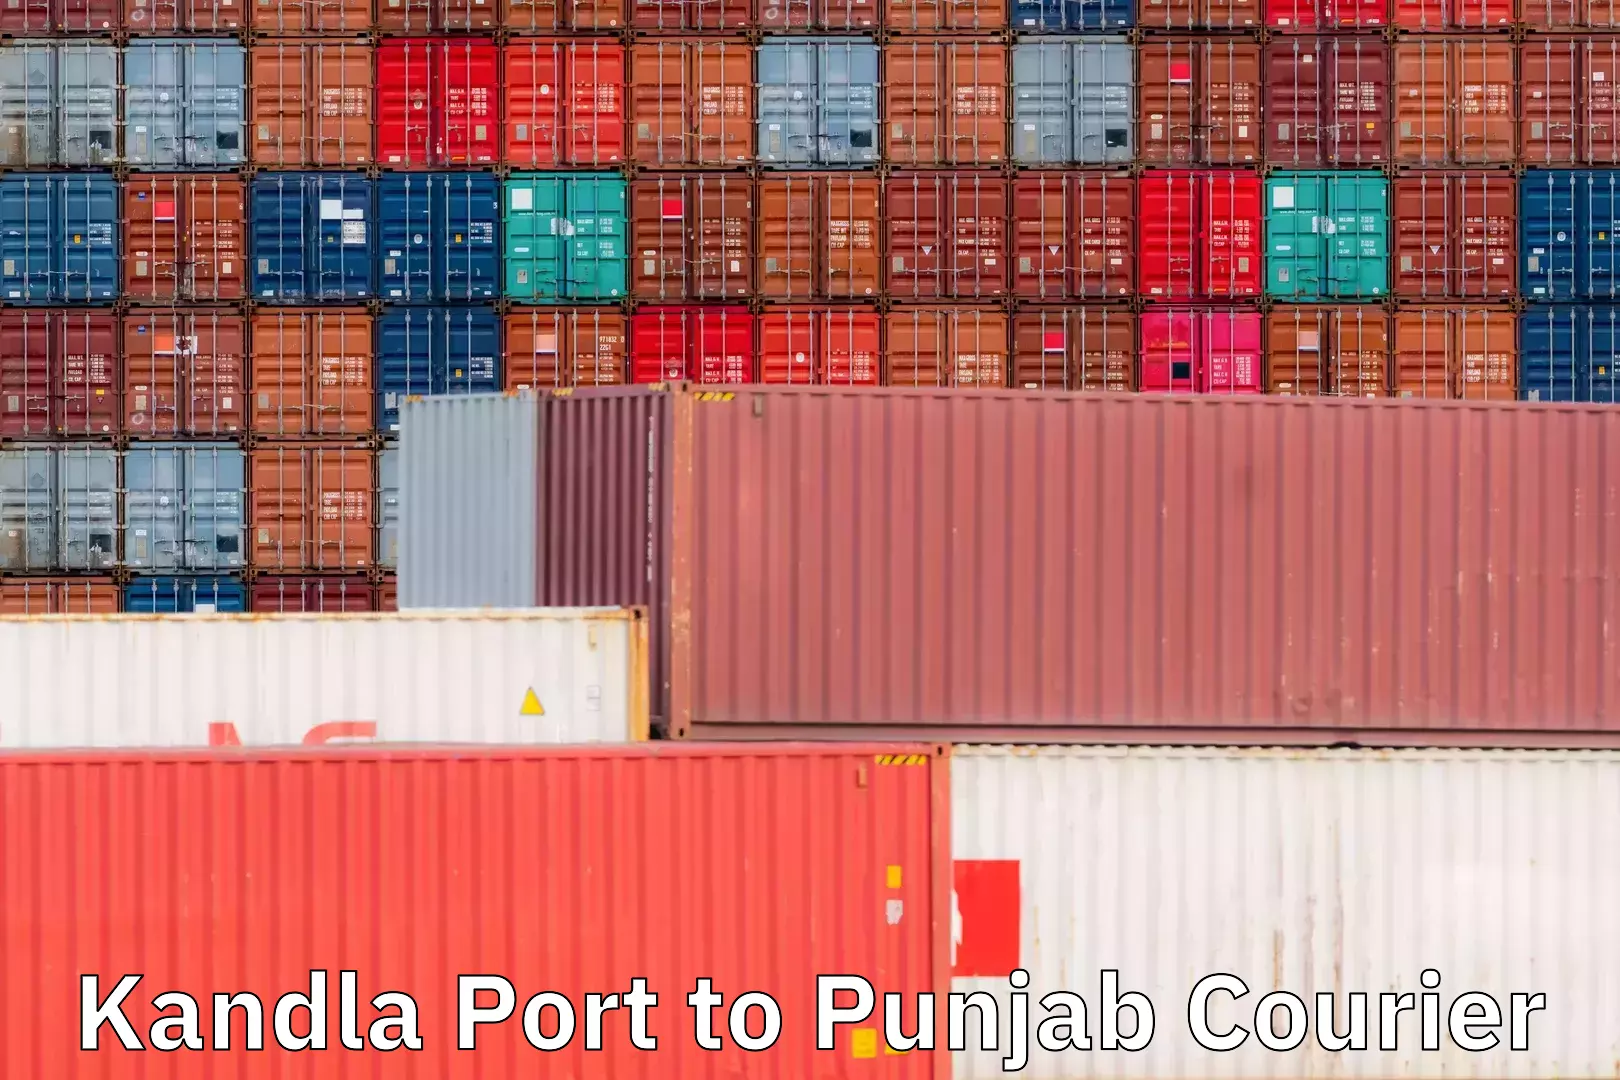 Courier service innovation Kandla Port to Punjab